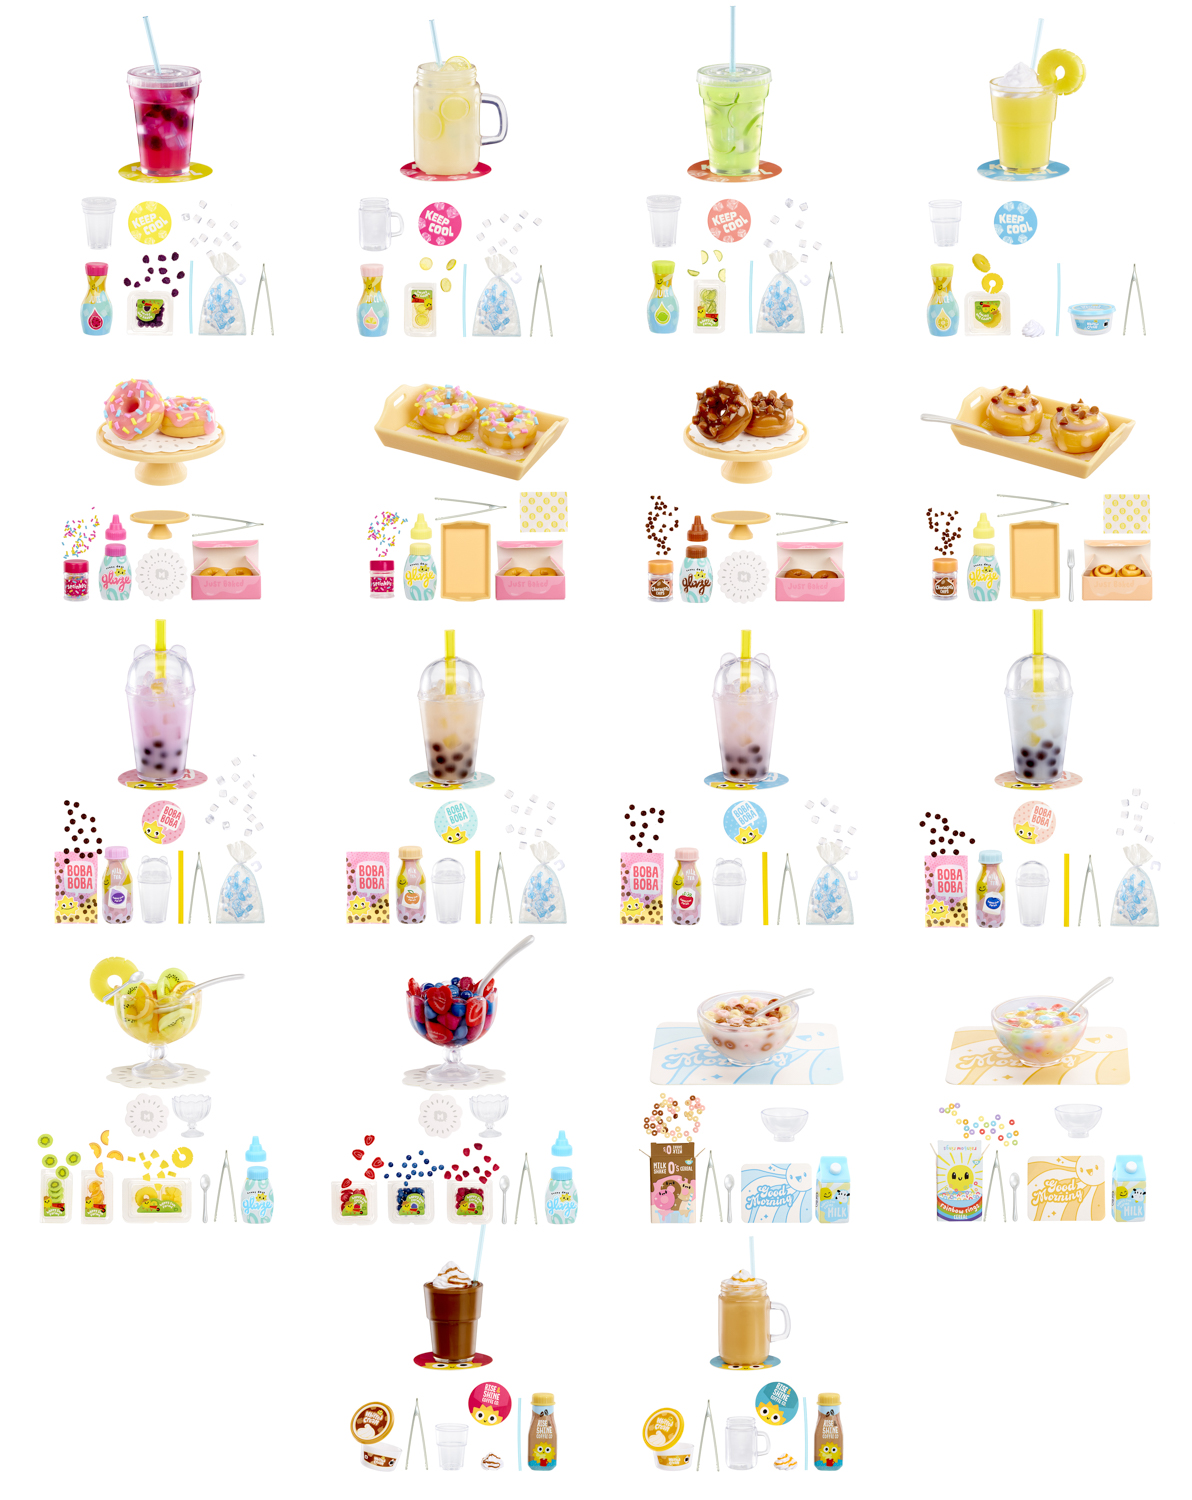 MGA's Miniverse - Make It Mini Food Diner Series 1 Minis • Showcase US